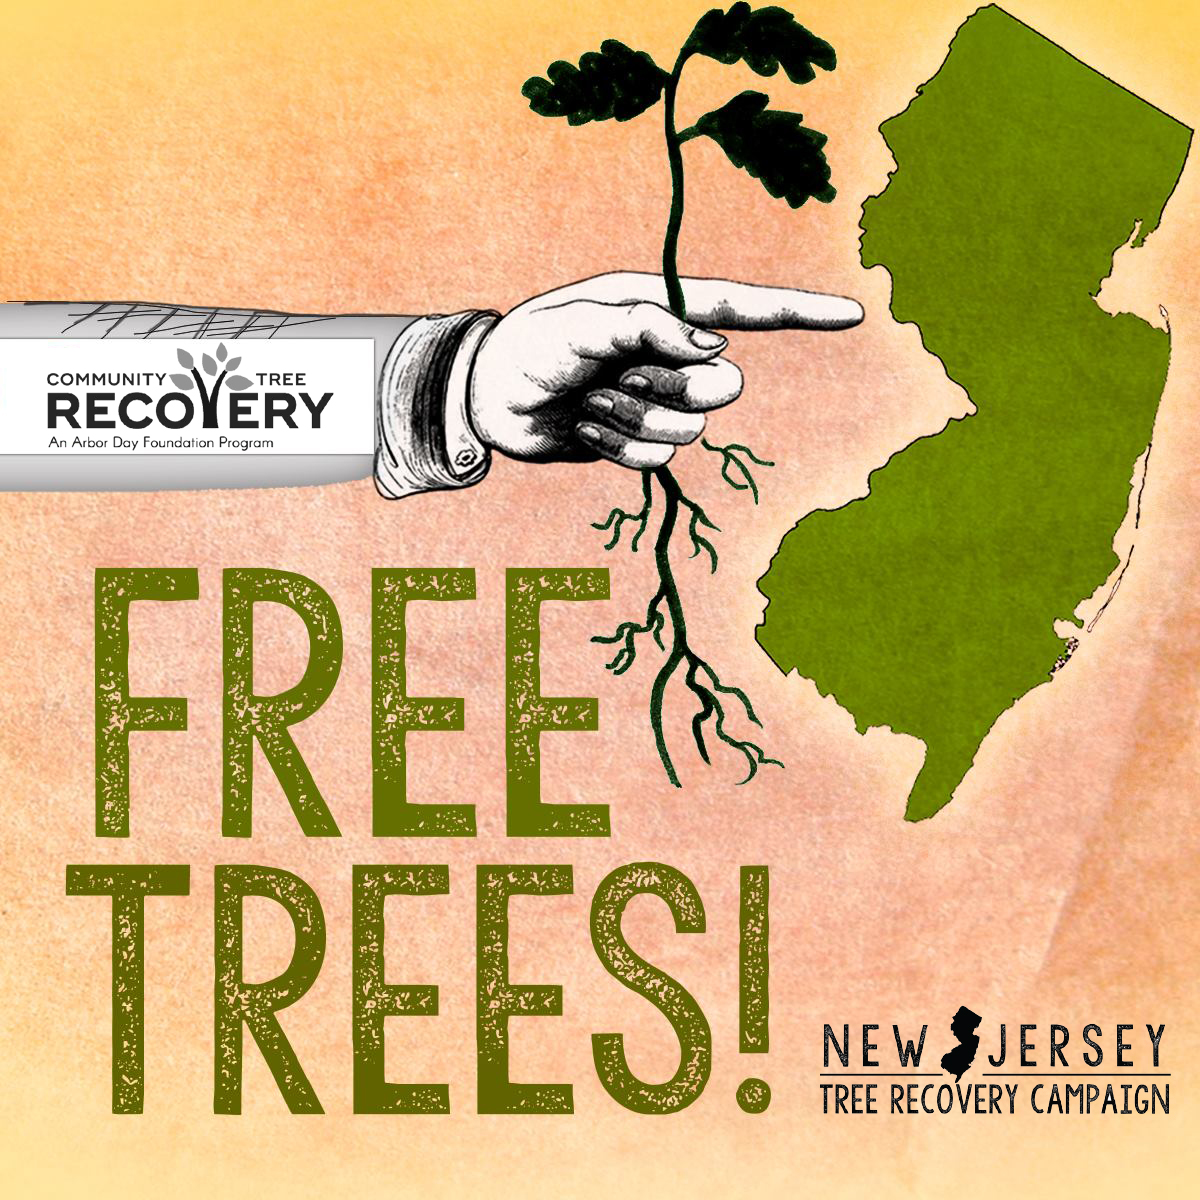 free trees